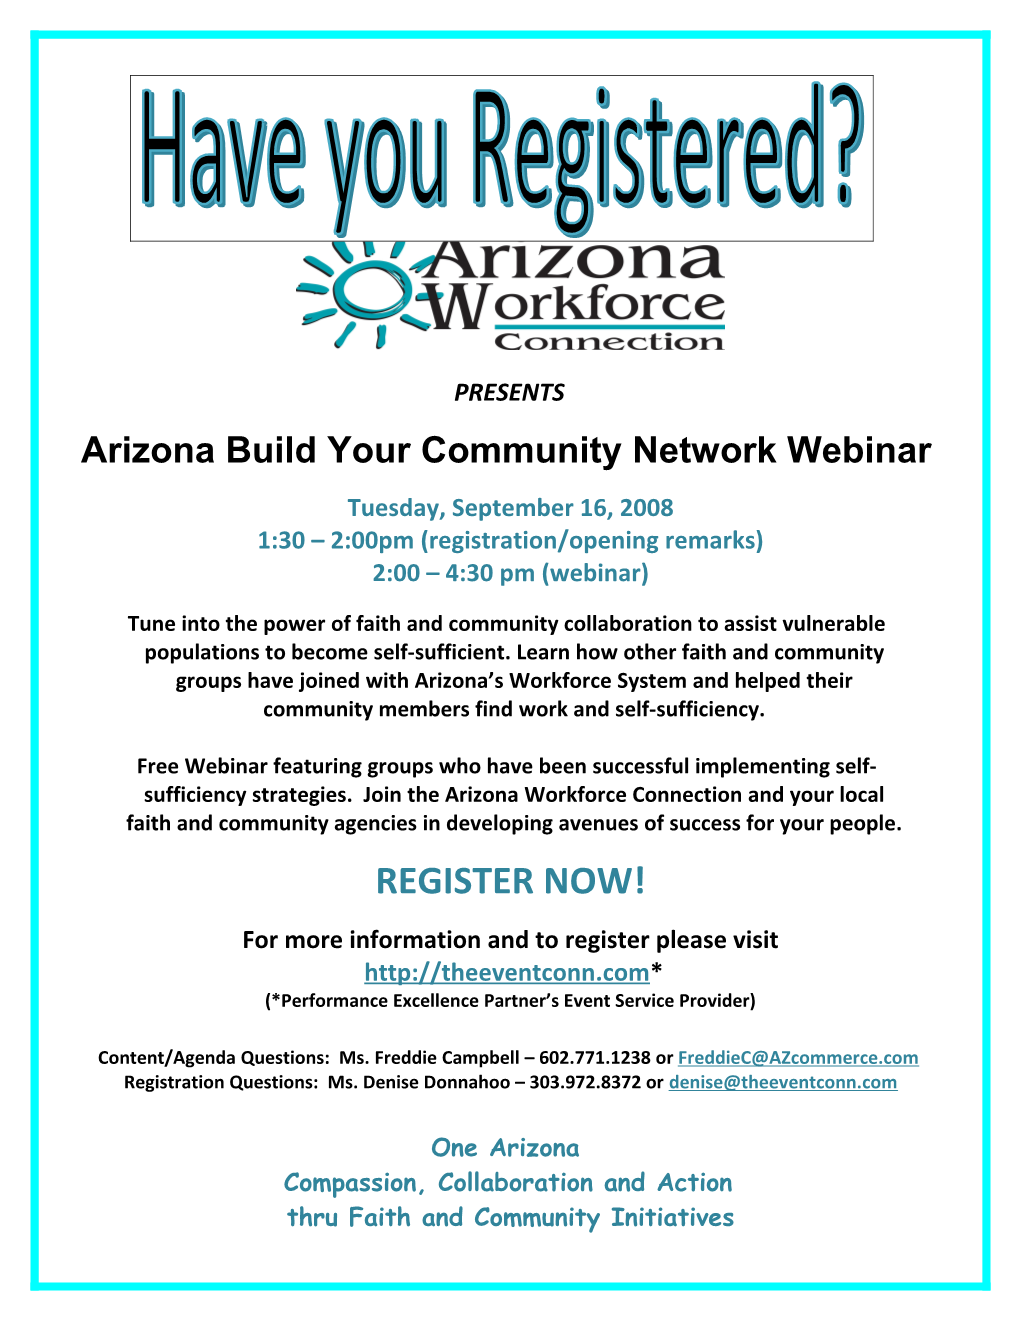 Arizona Build Your Community Network Webinar